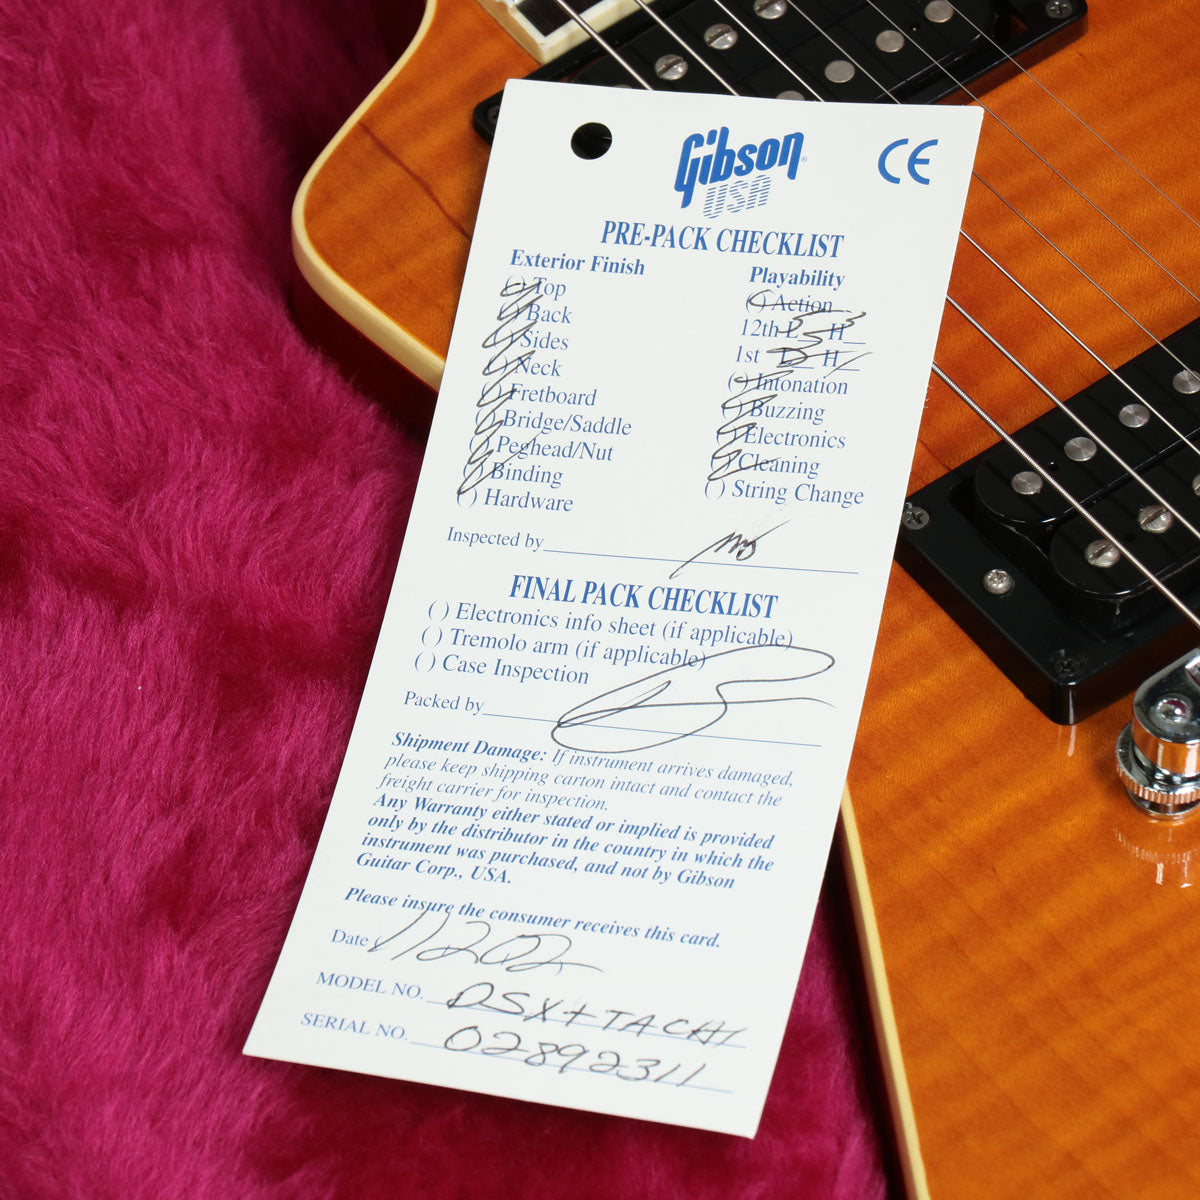 [SN 02892311] USED Gibson USA / X-plorer Pro Trans Amber [2002/3.34kg] Gibson Explorer Electric Guitar [08]